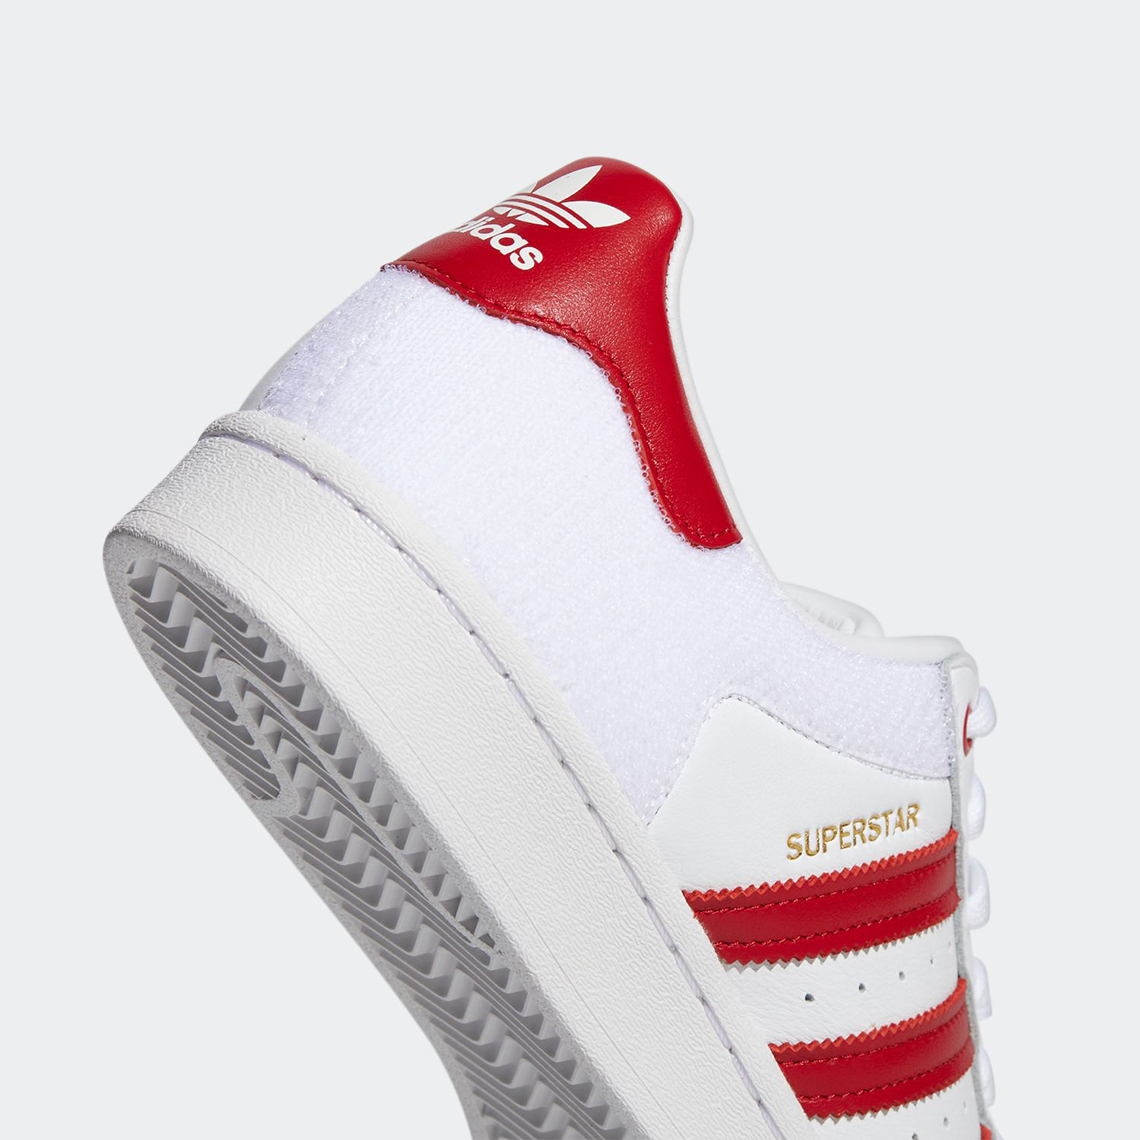 Adidas Superstar Velcro White Red Fy3117 7